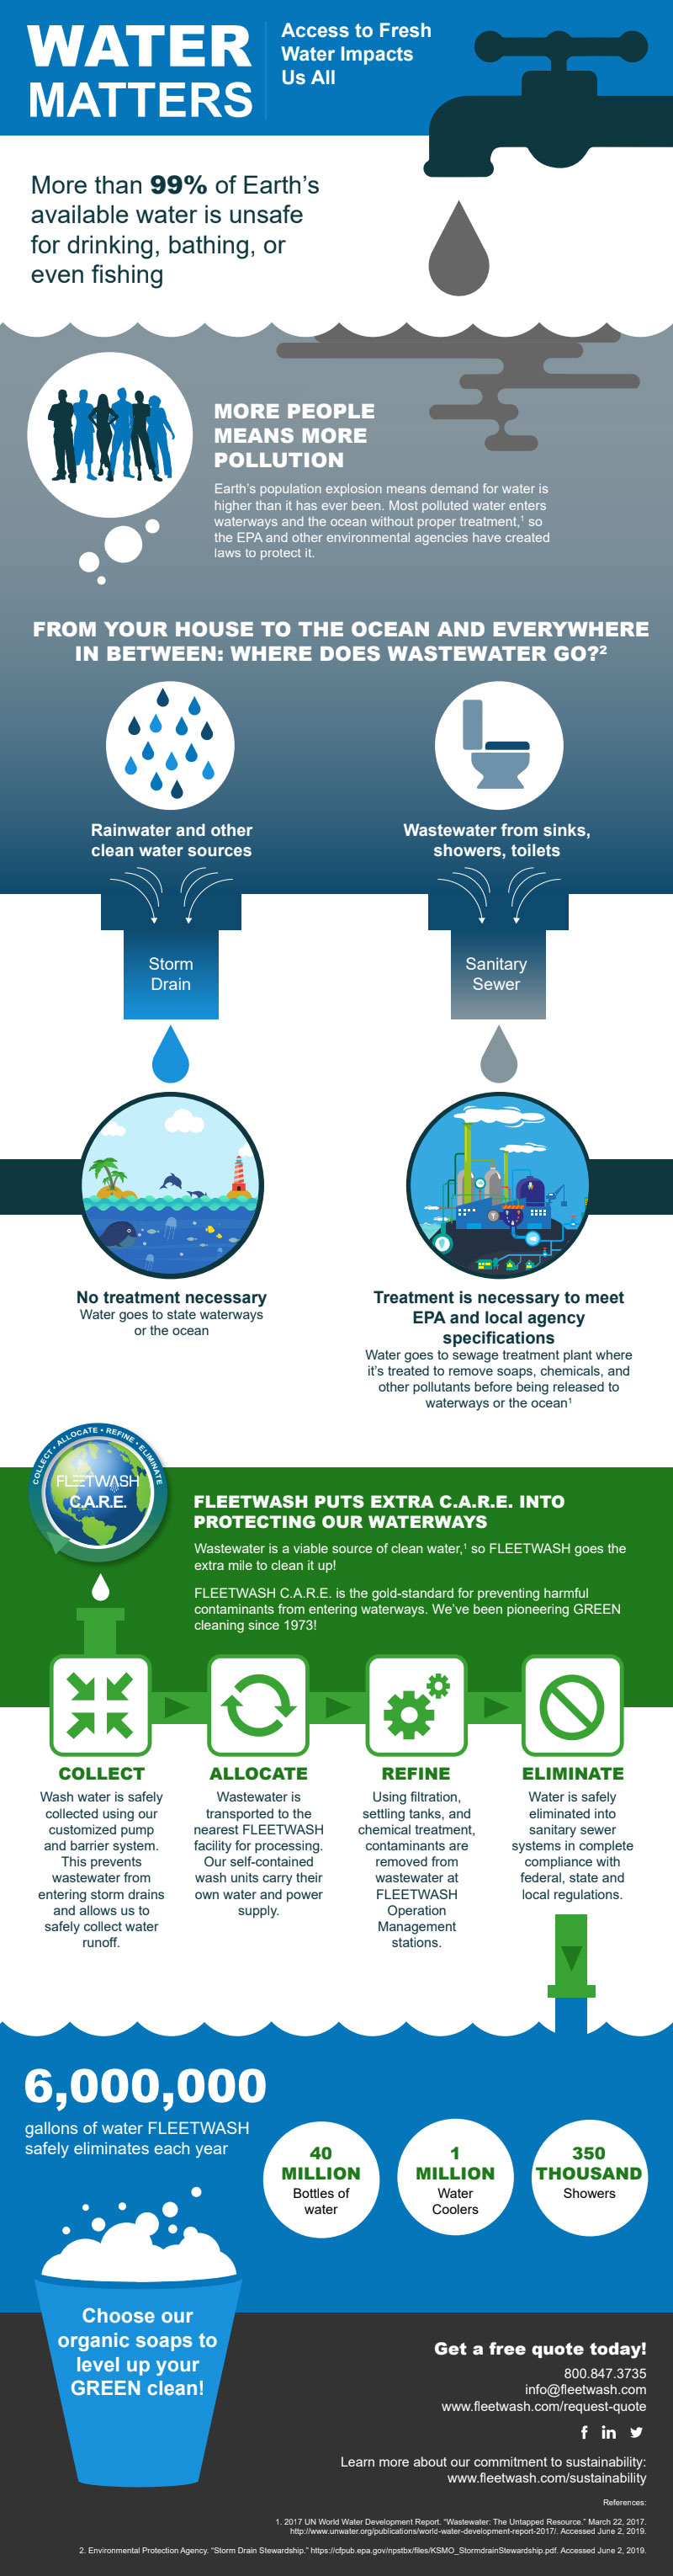 Sustainability Infographic - FLEETWASH